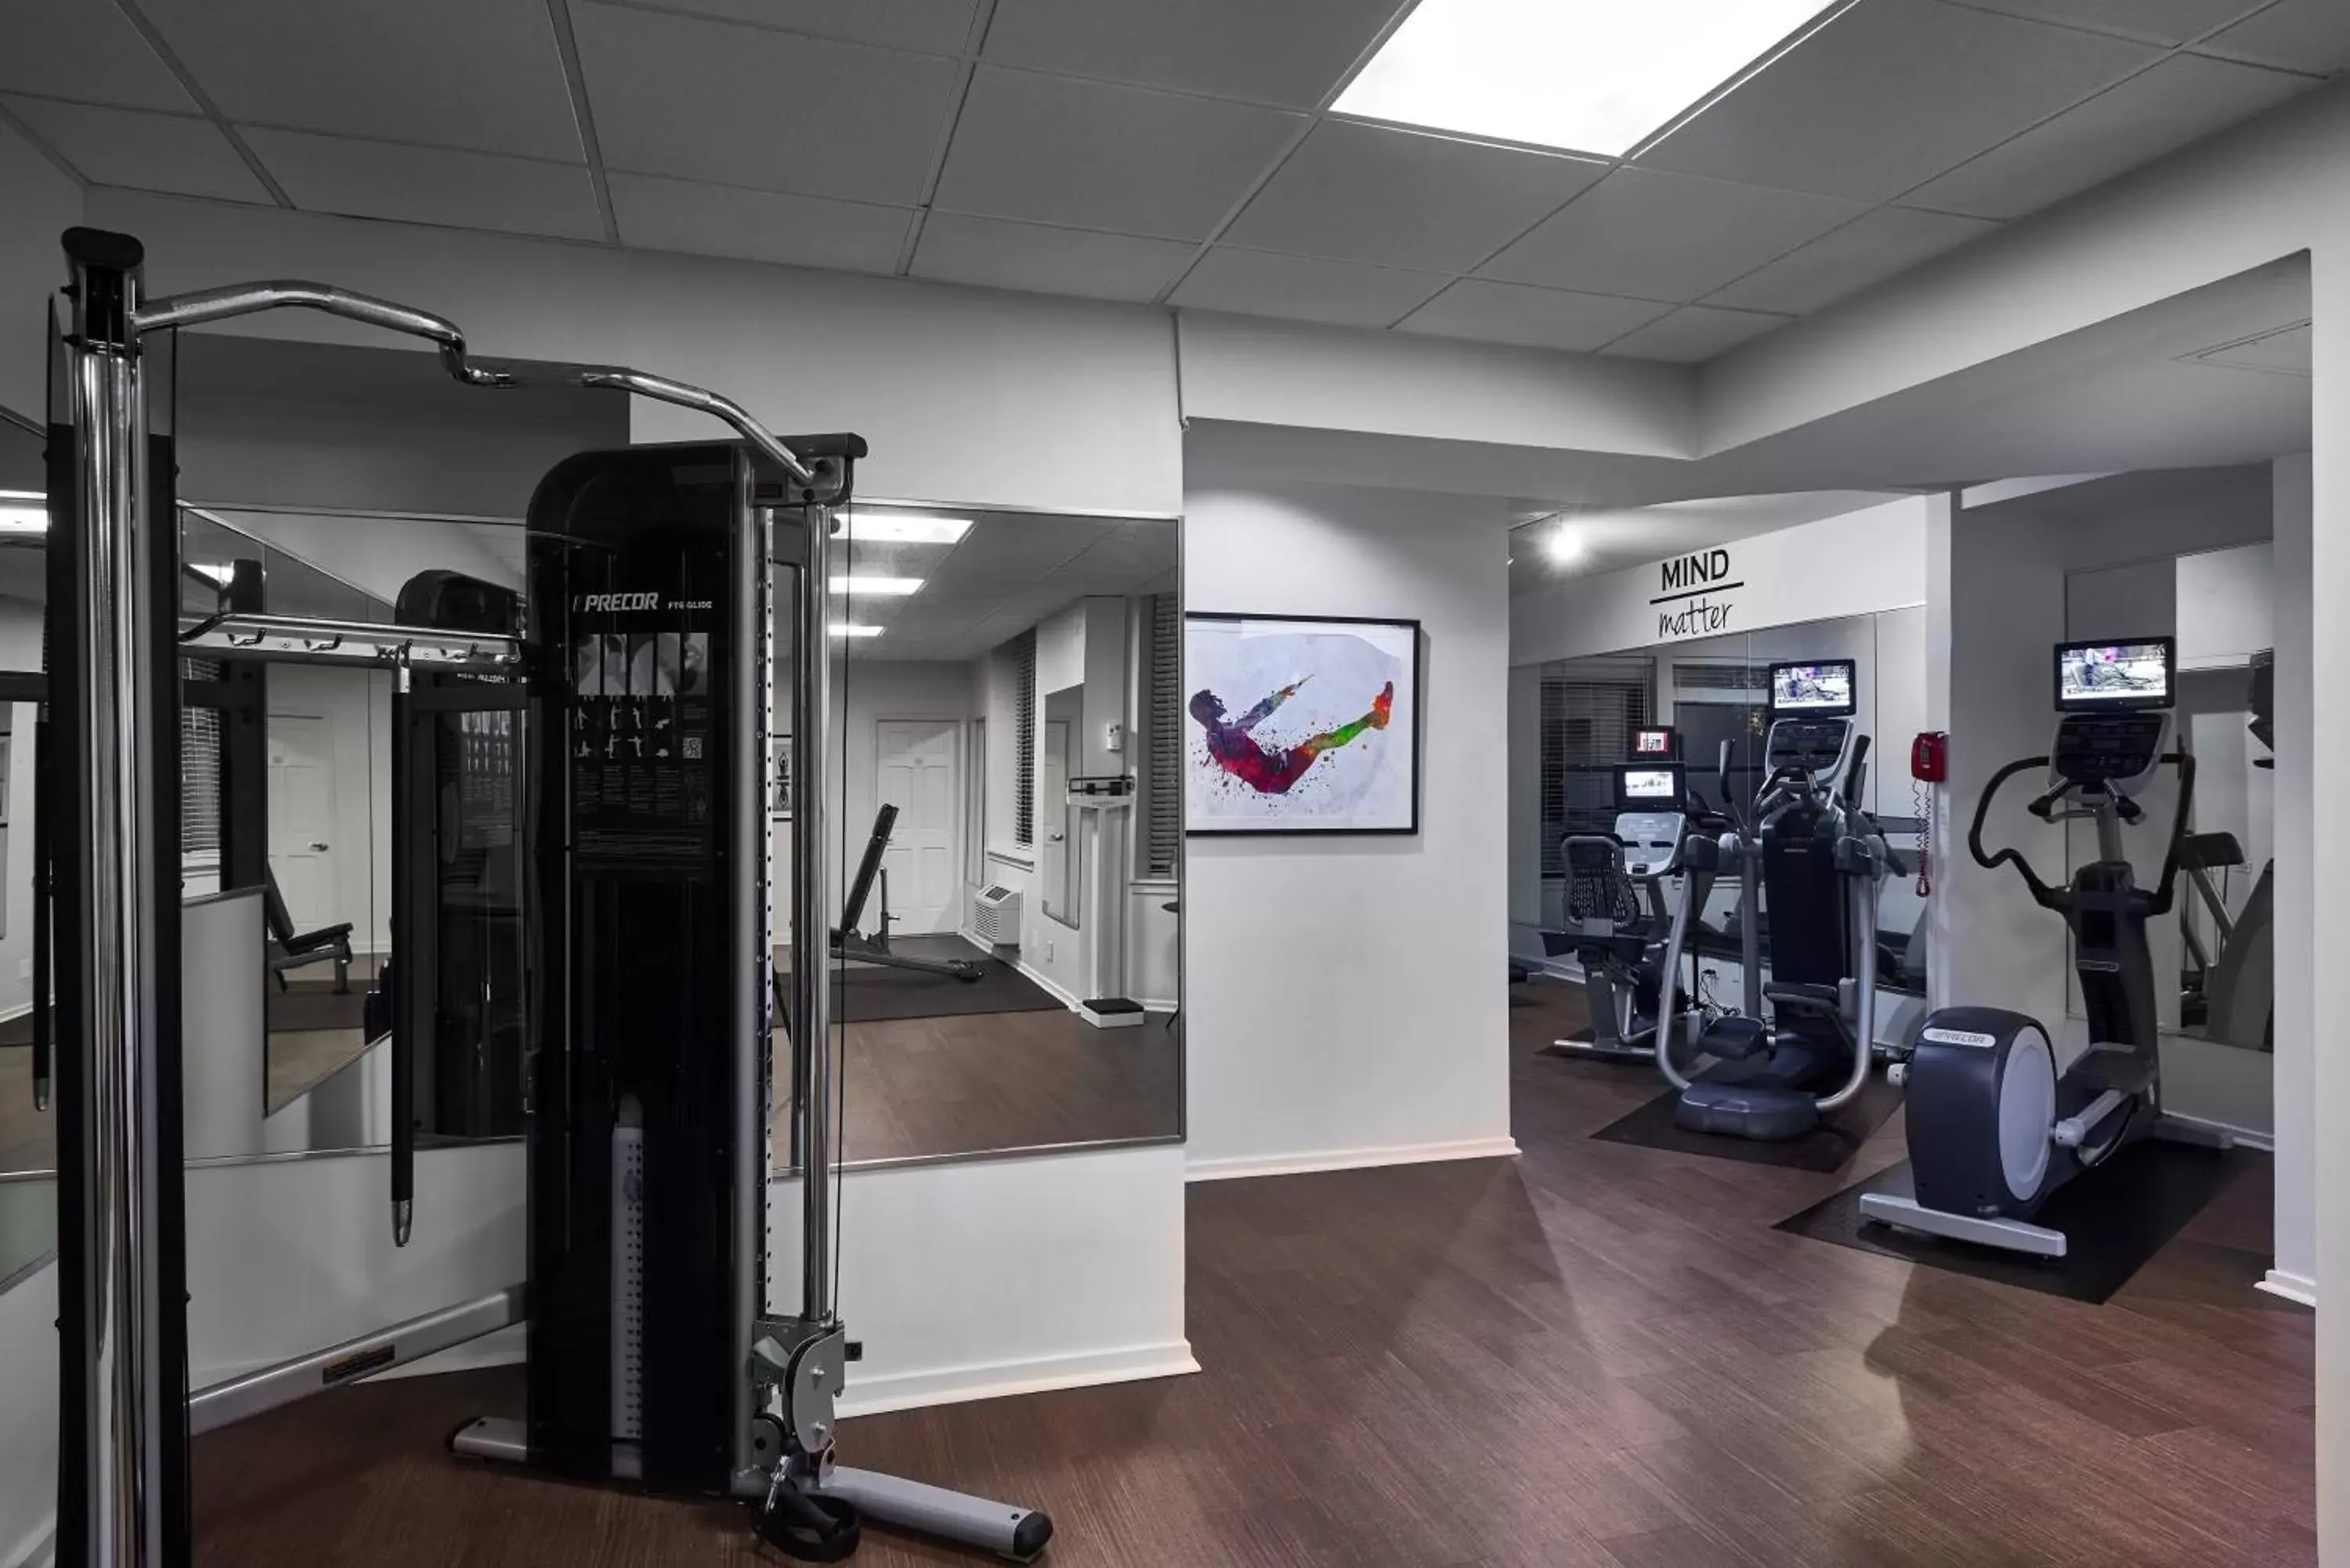 Fitness centre/facilities, Fitness Center/Facilities in Claridge House